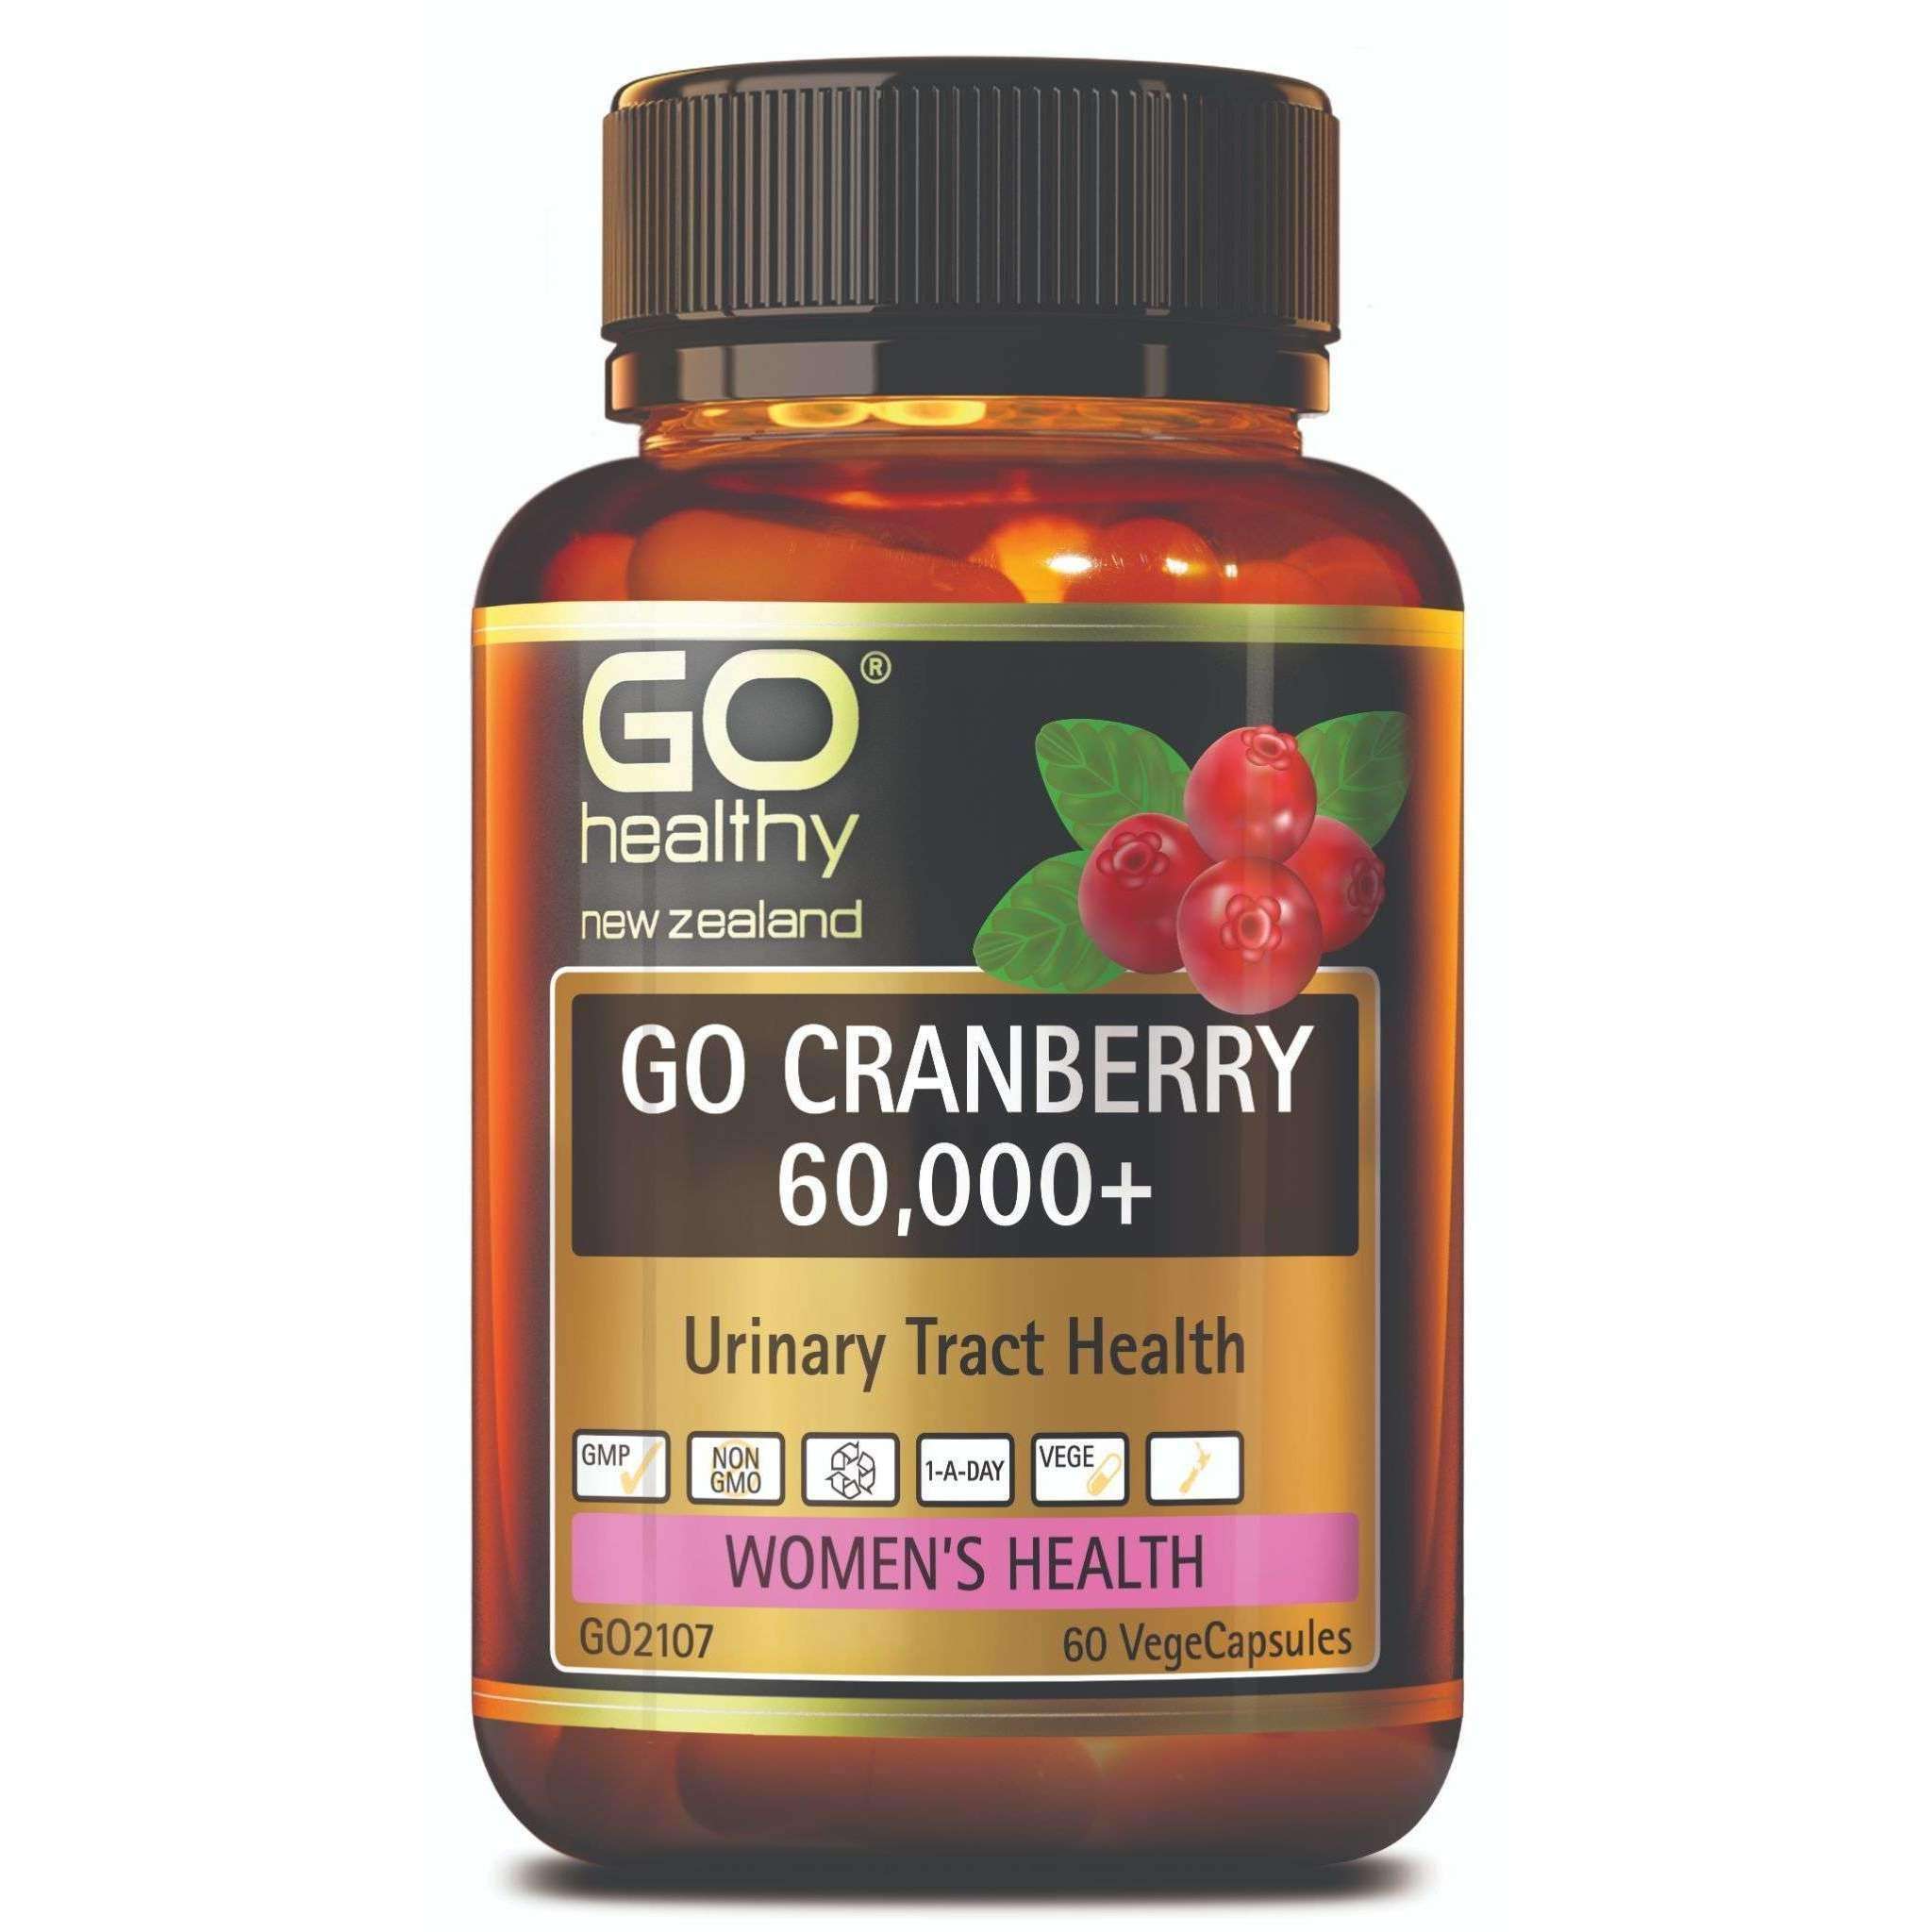 Go Healthy Go Cranberry 60,000+